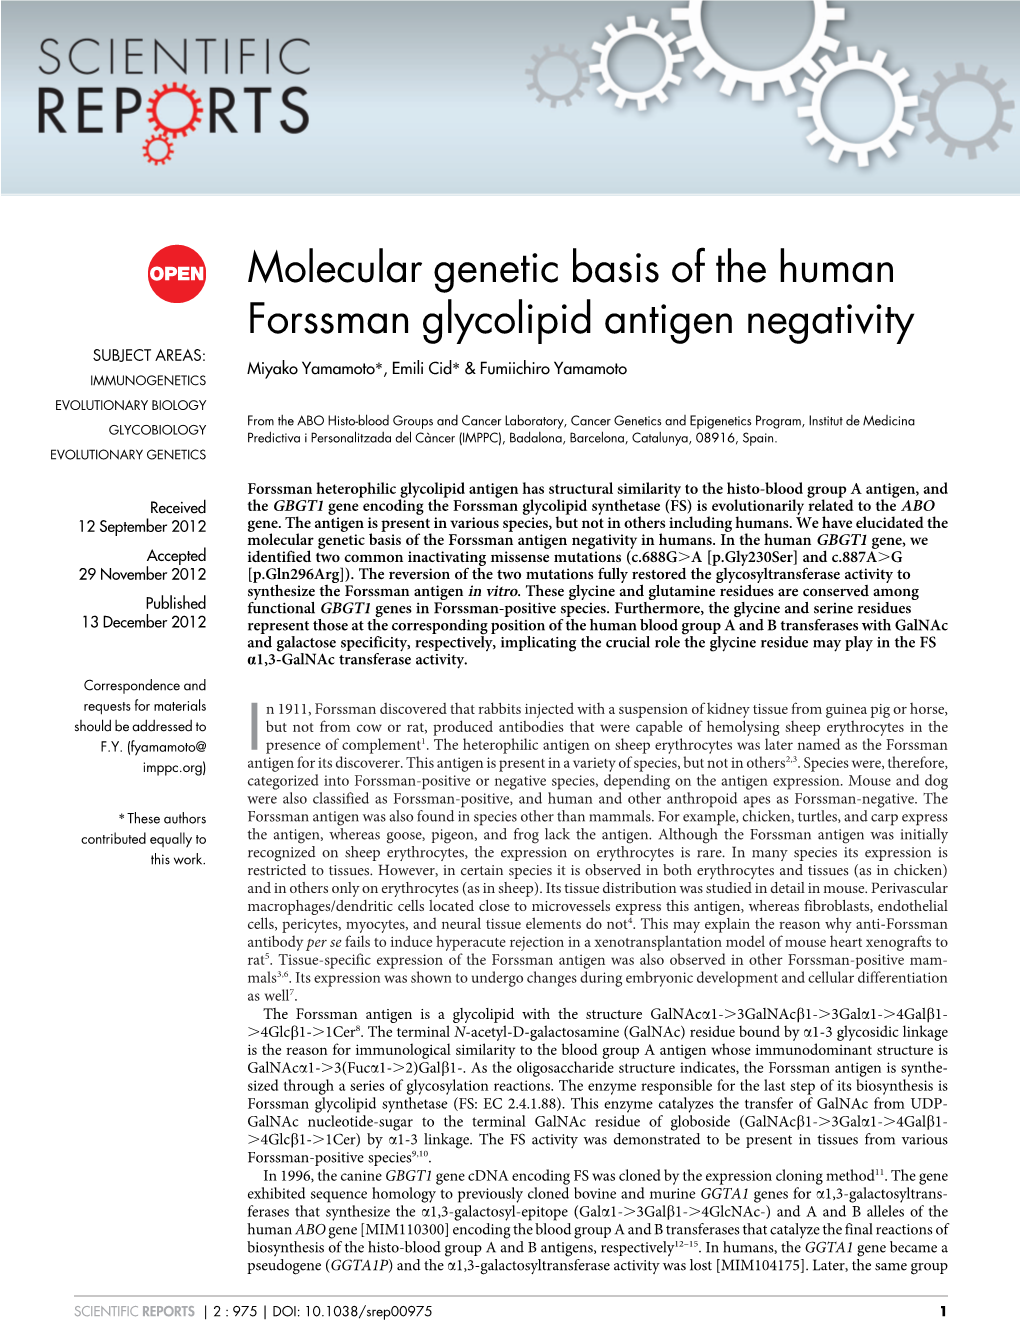 Molecular Genetic Basis of the Human Forssman Glycolipid Antigen